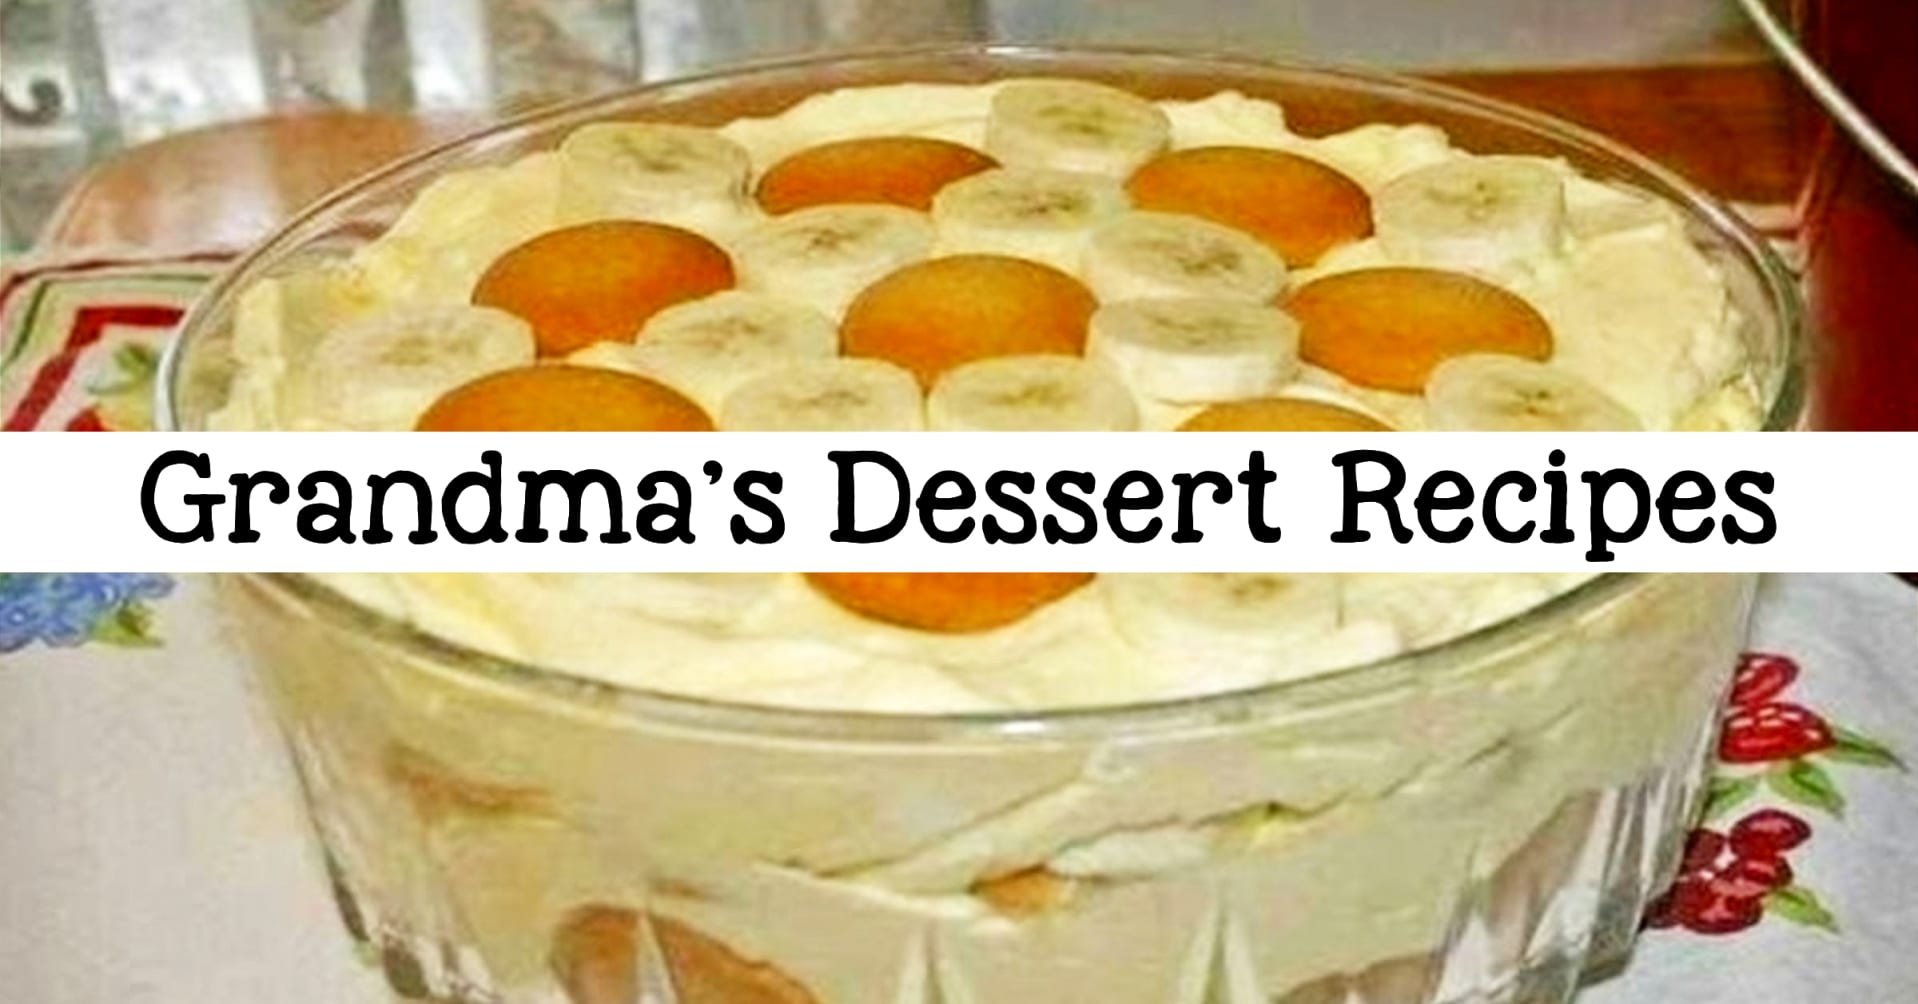 Grandma's Dessert Recipes